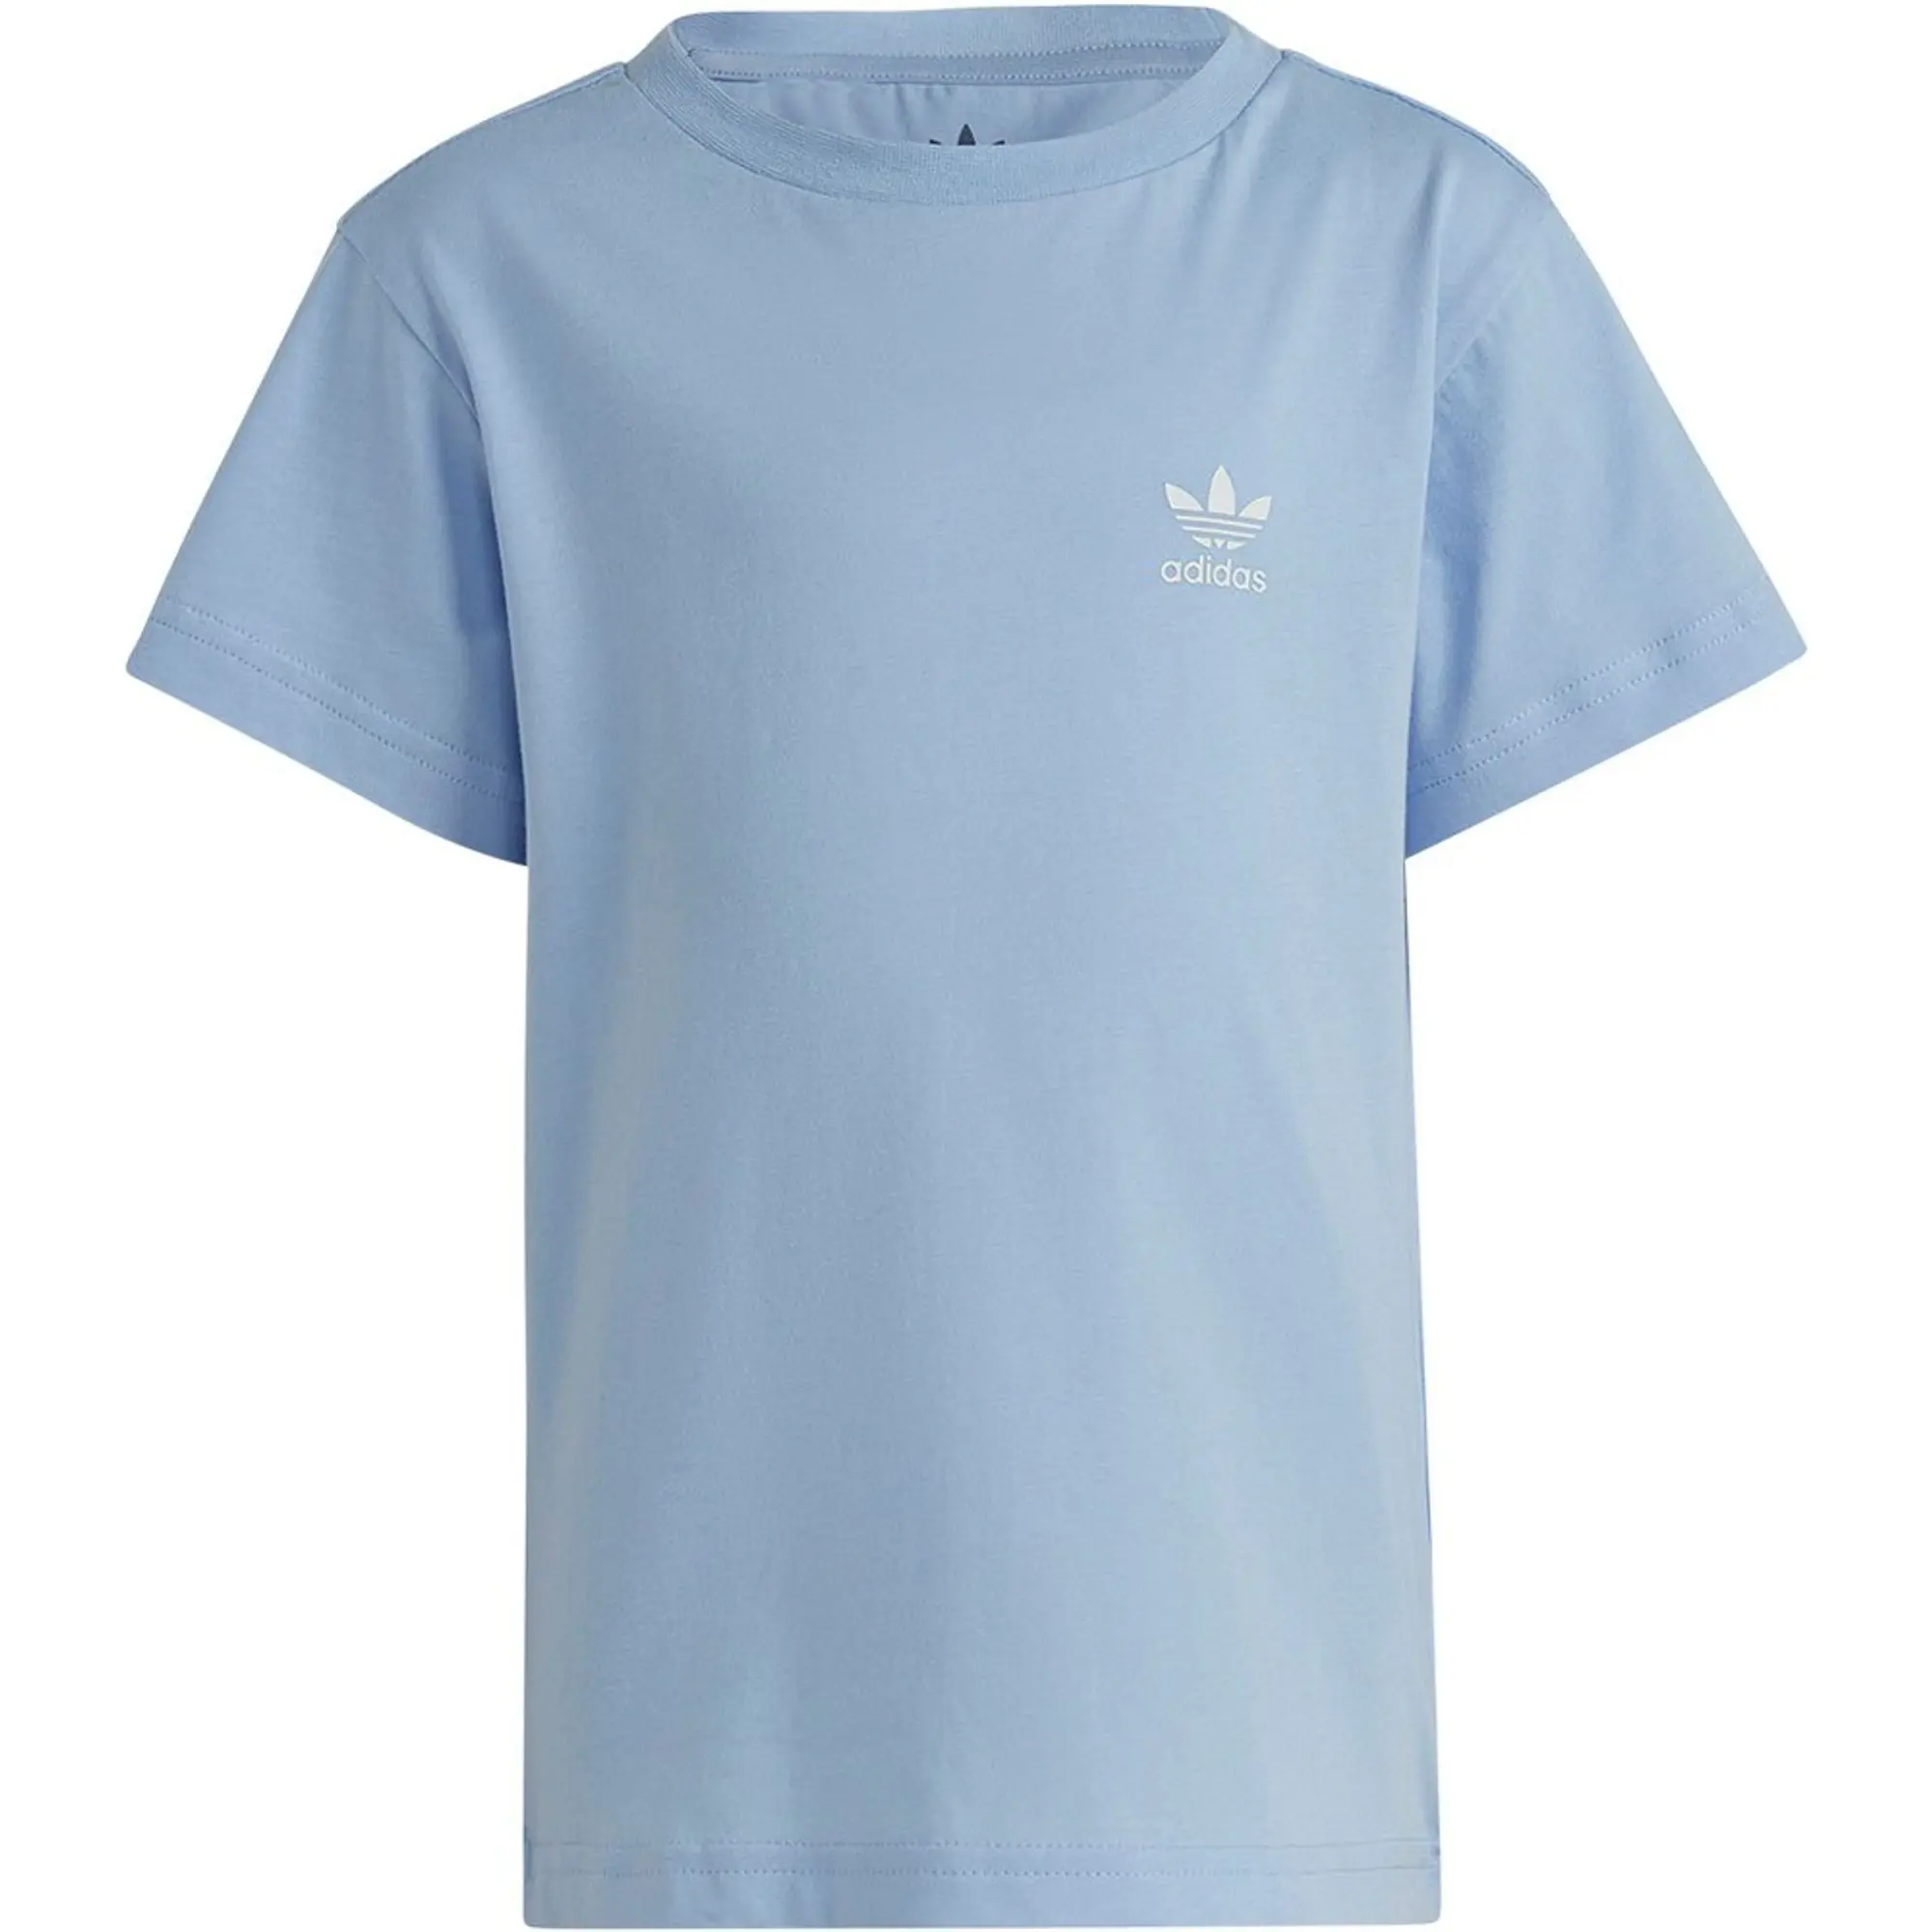 Adidas Originals Adicolor T-Shirt IB9905 - Kids Blue 